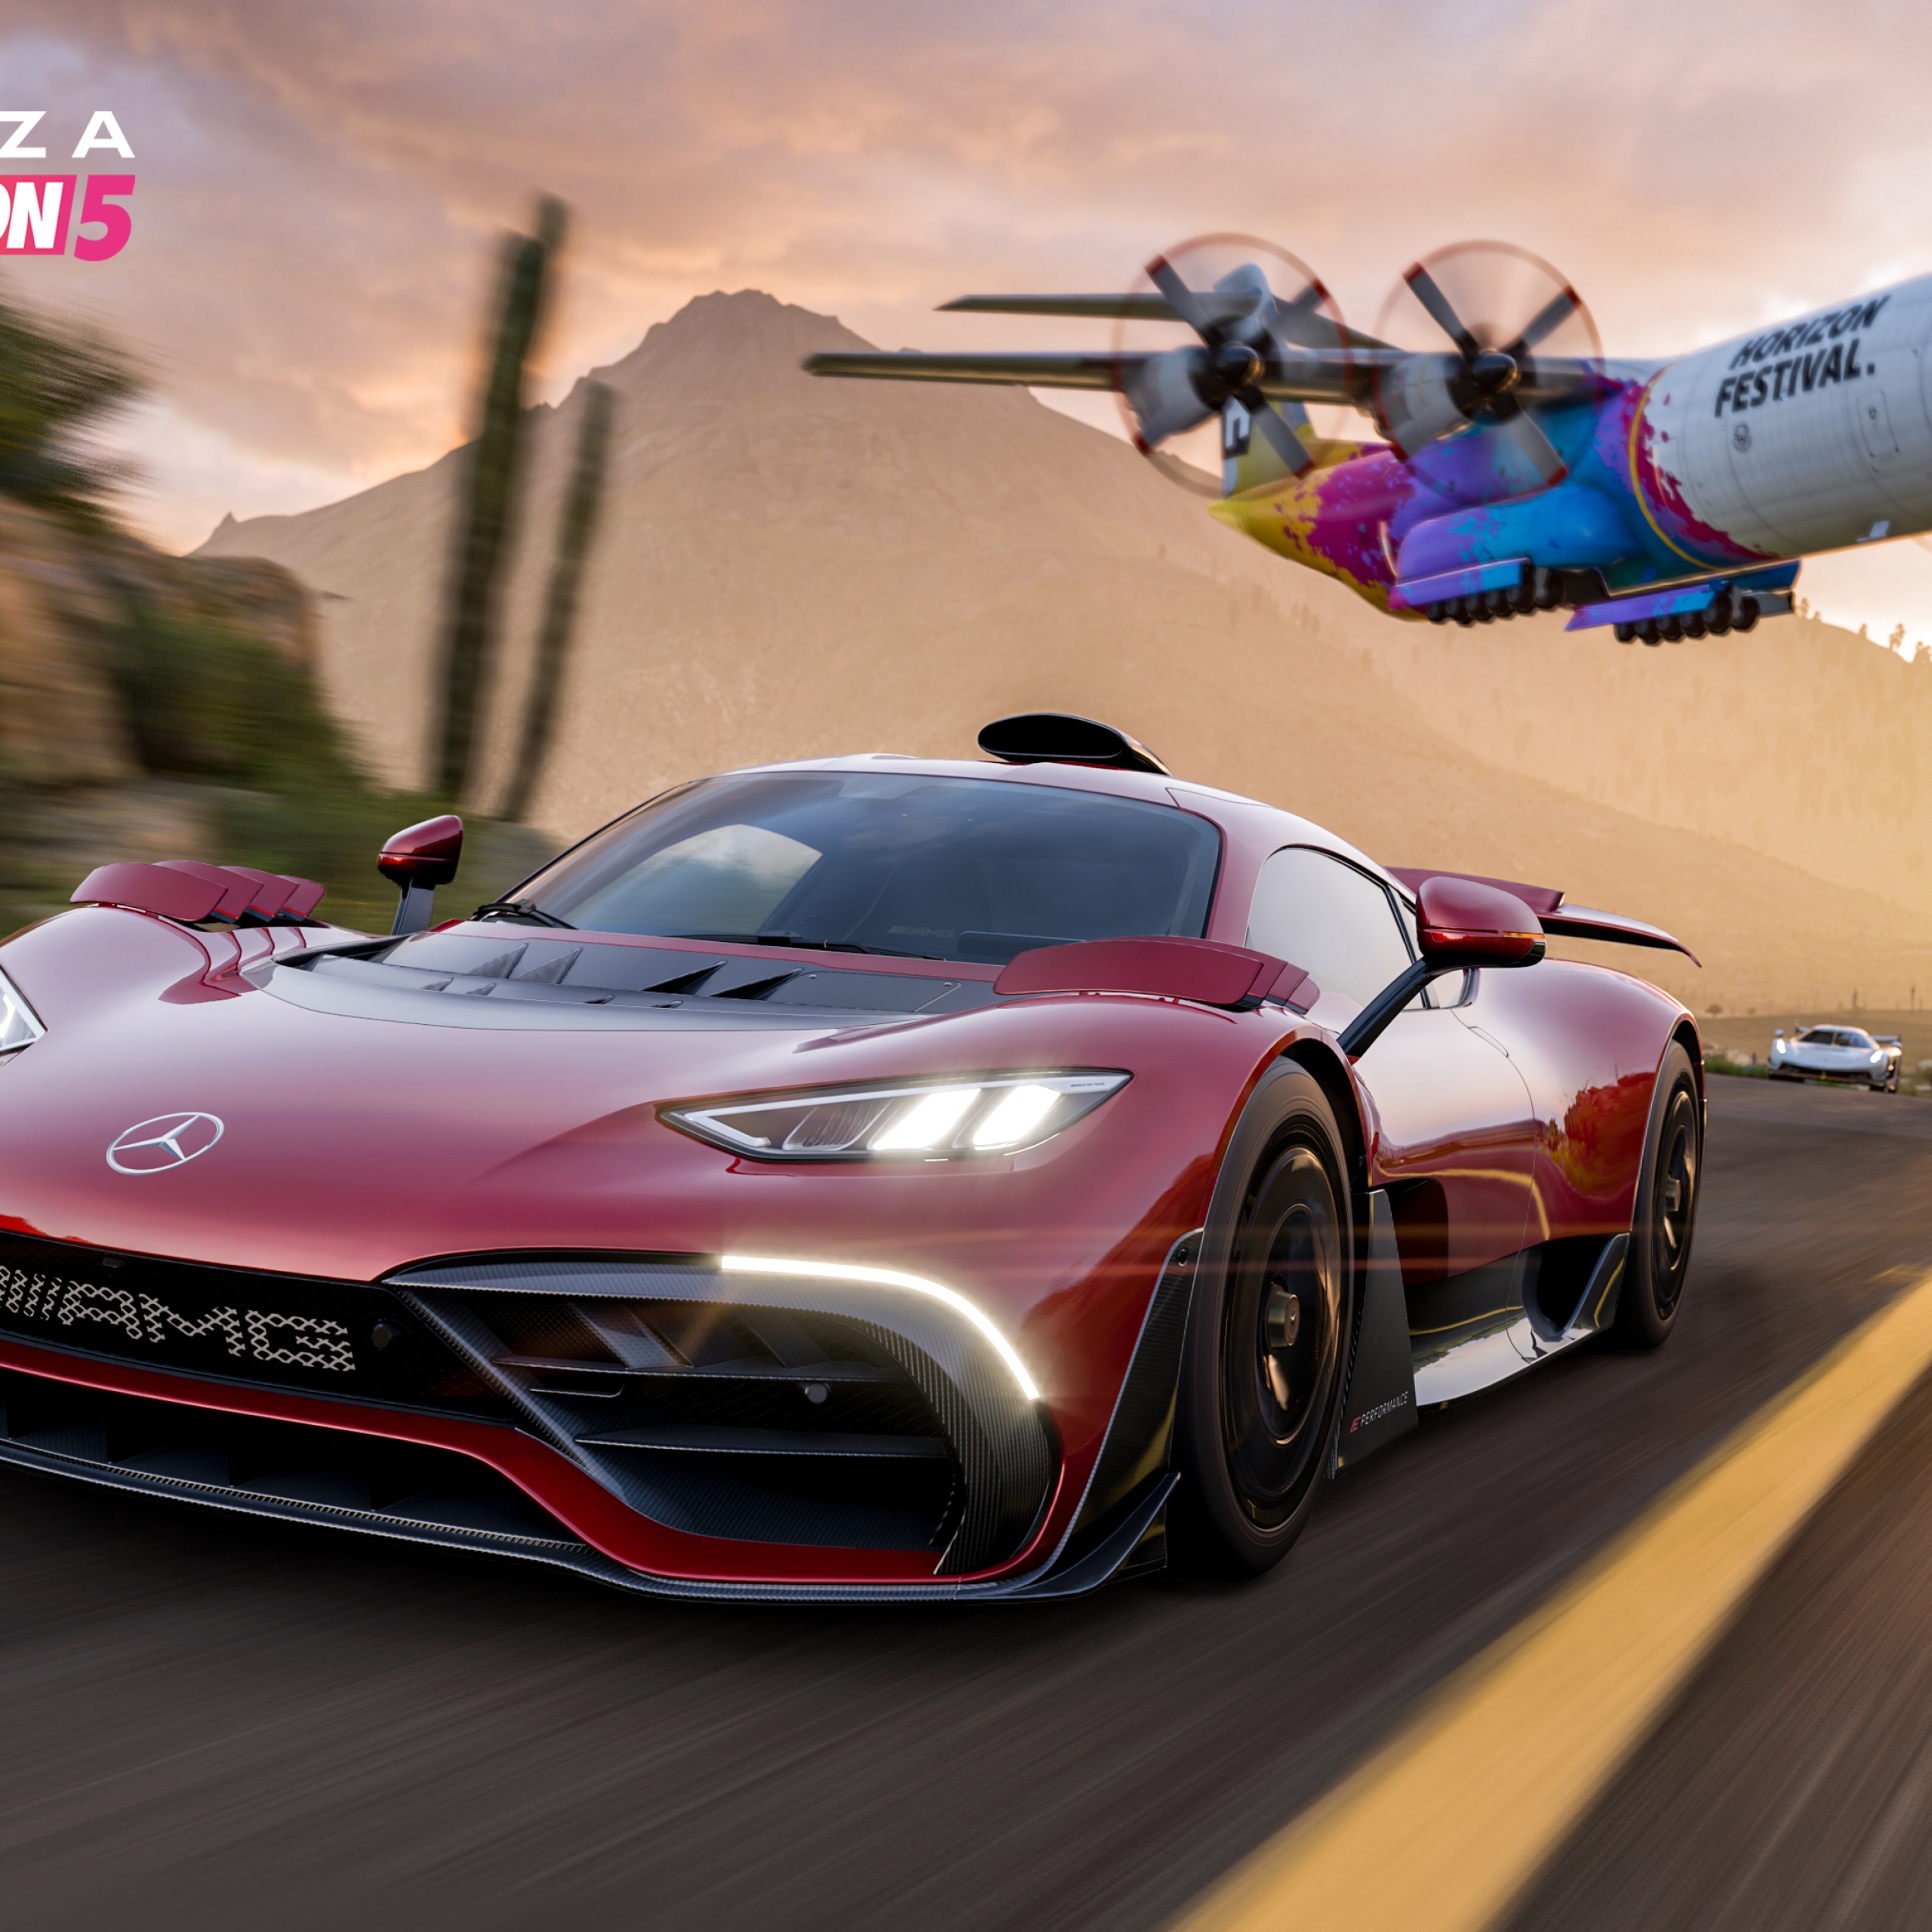 Версии форза хорайзен 5. Forza Horizon PLAYSTATION. Форза хорайзон 5. Forza Horizon 5 PLAYSTATION. Forza Horizon ps5.